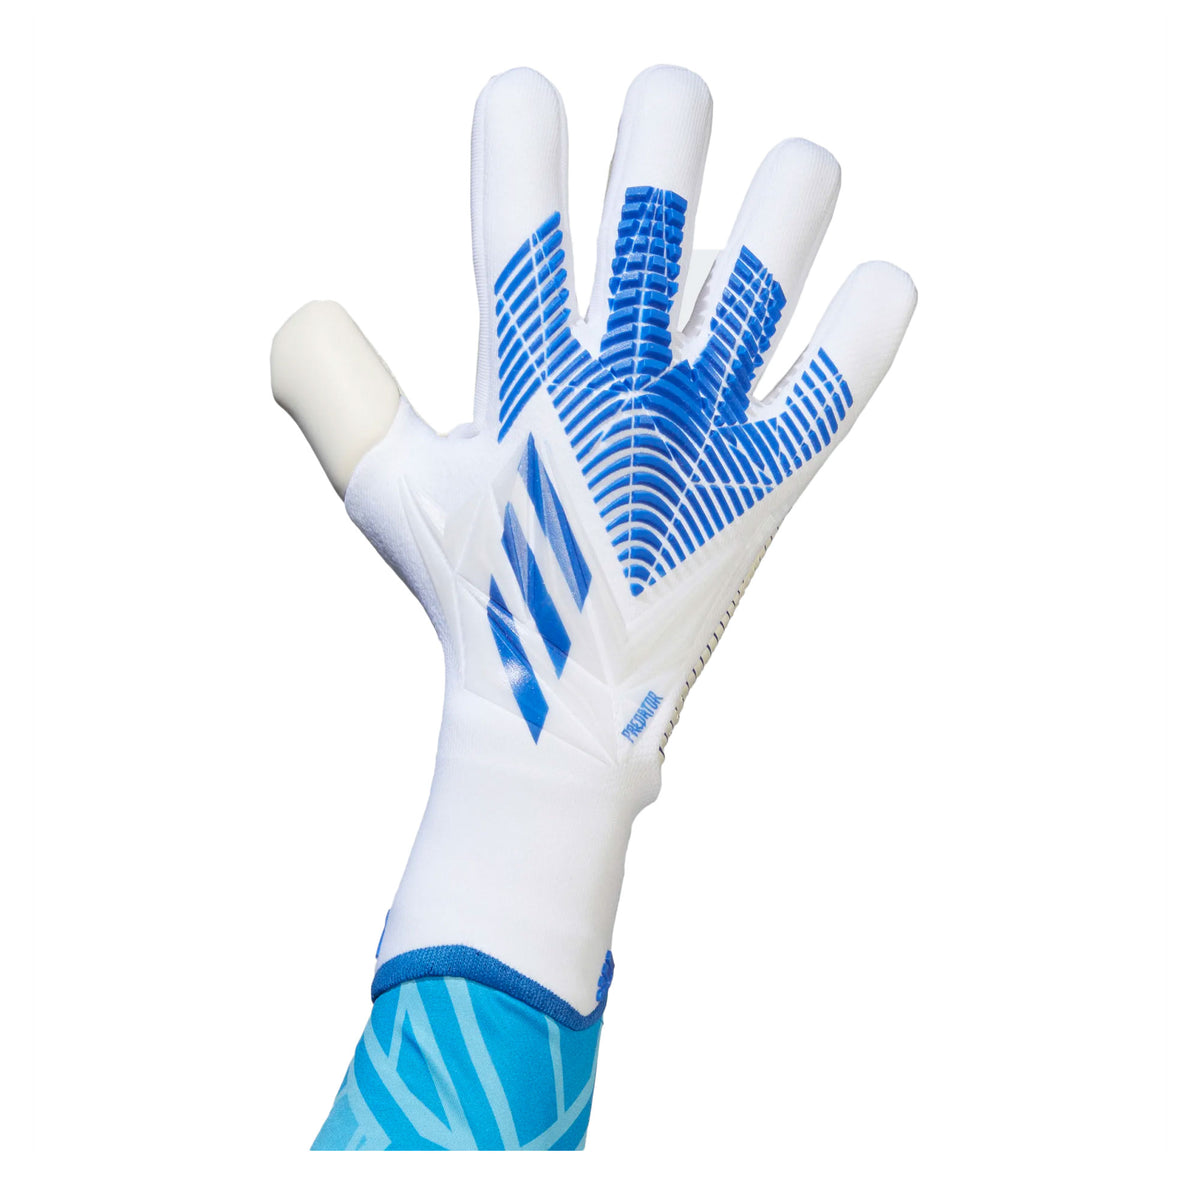 Adidas Goalkeeper Gloves